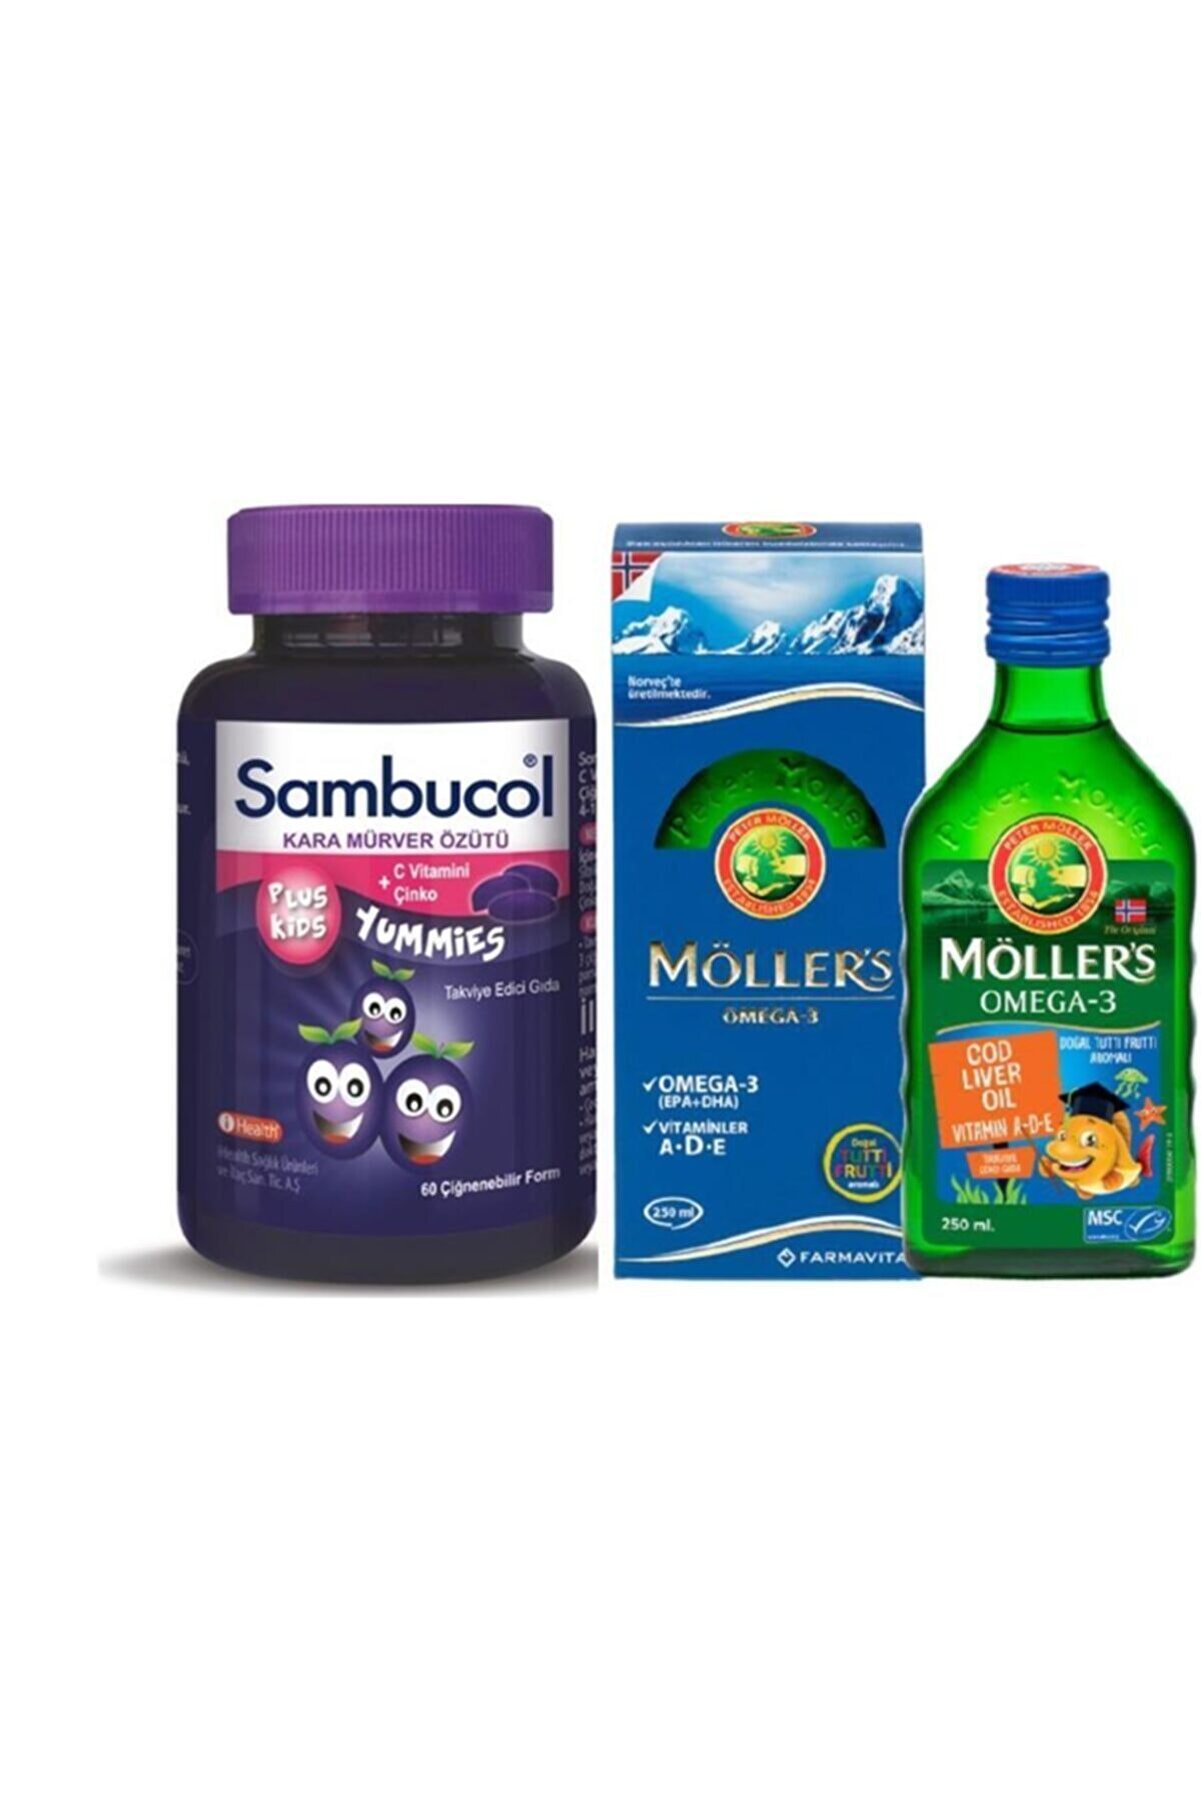 Sambucol Plus Kids Yummies 60 Çiğneme Tableti+möller's Omega-3 Balık Yağı Şurubu Tutti Frutti 250 Ml